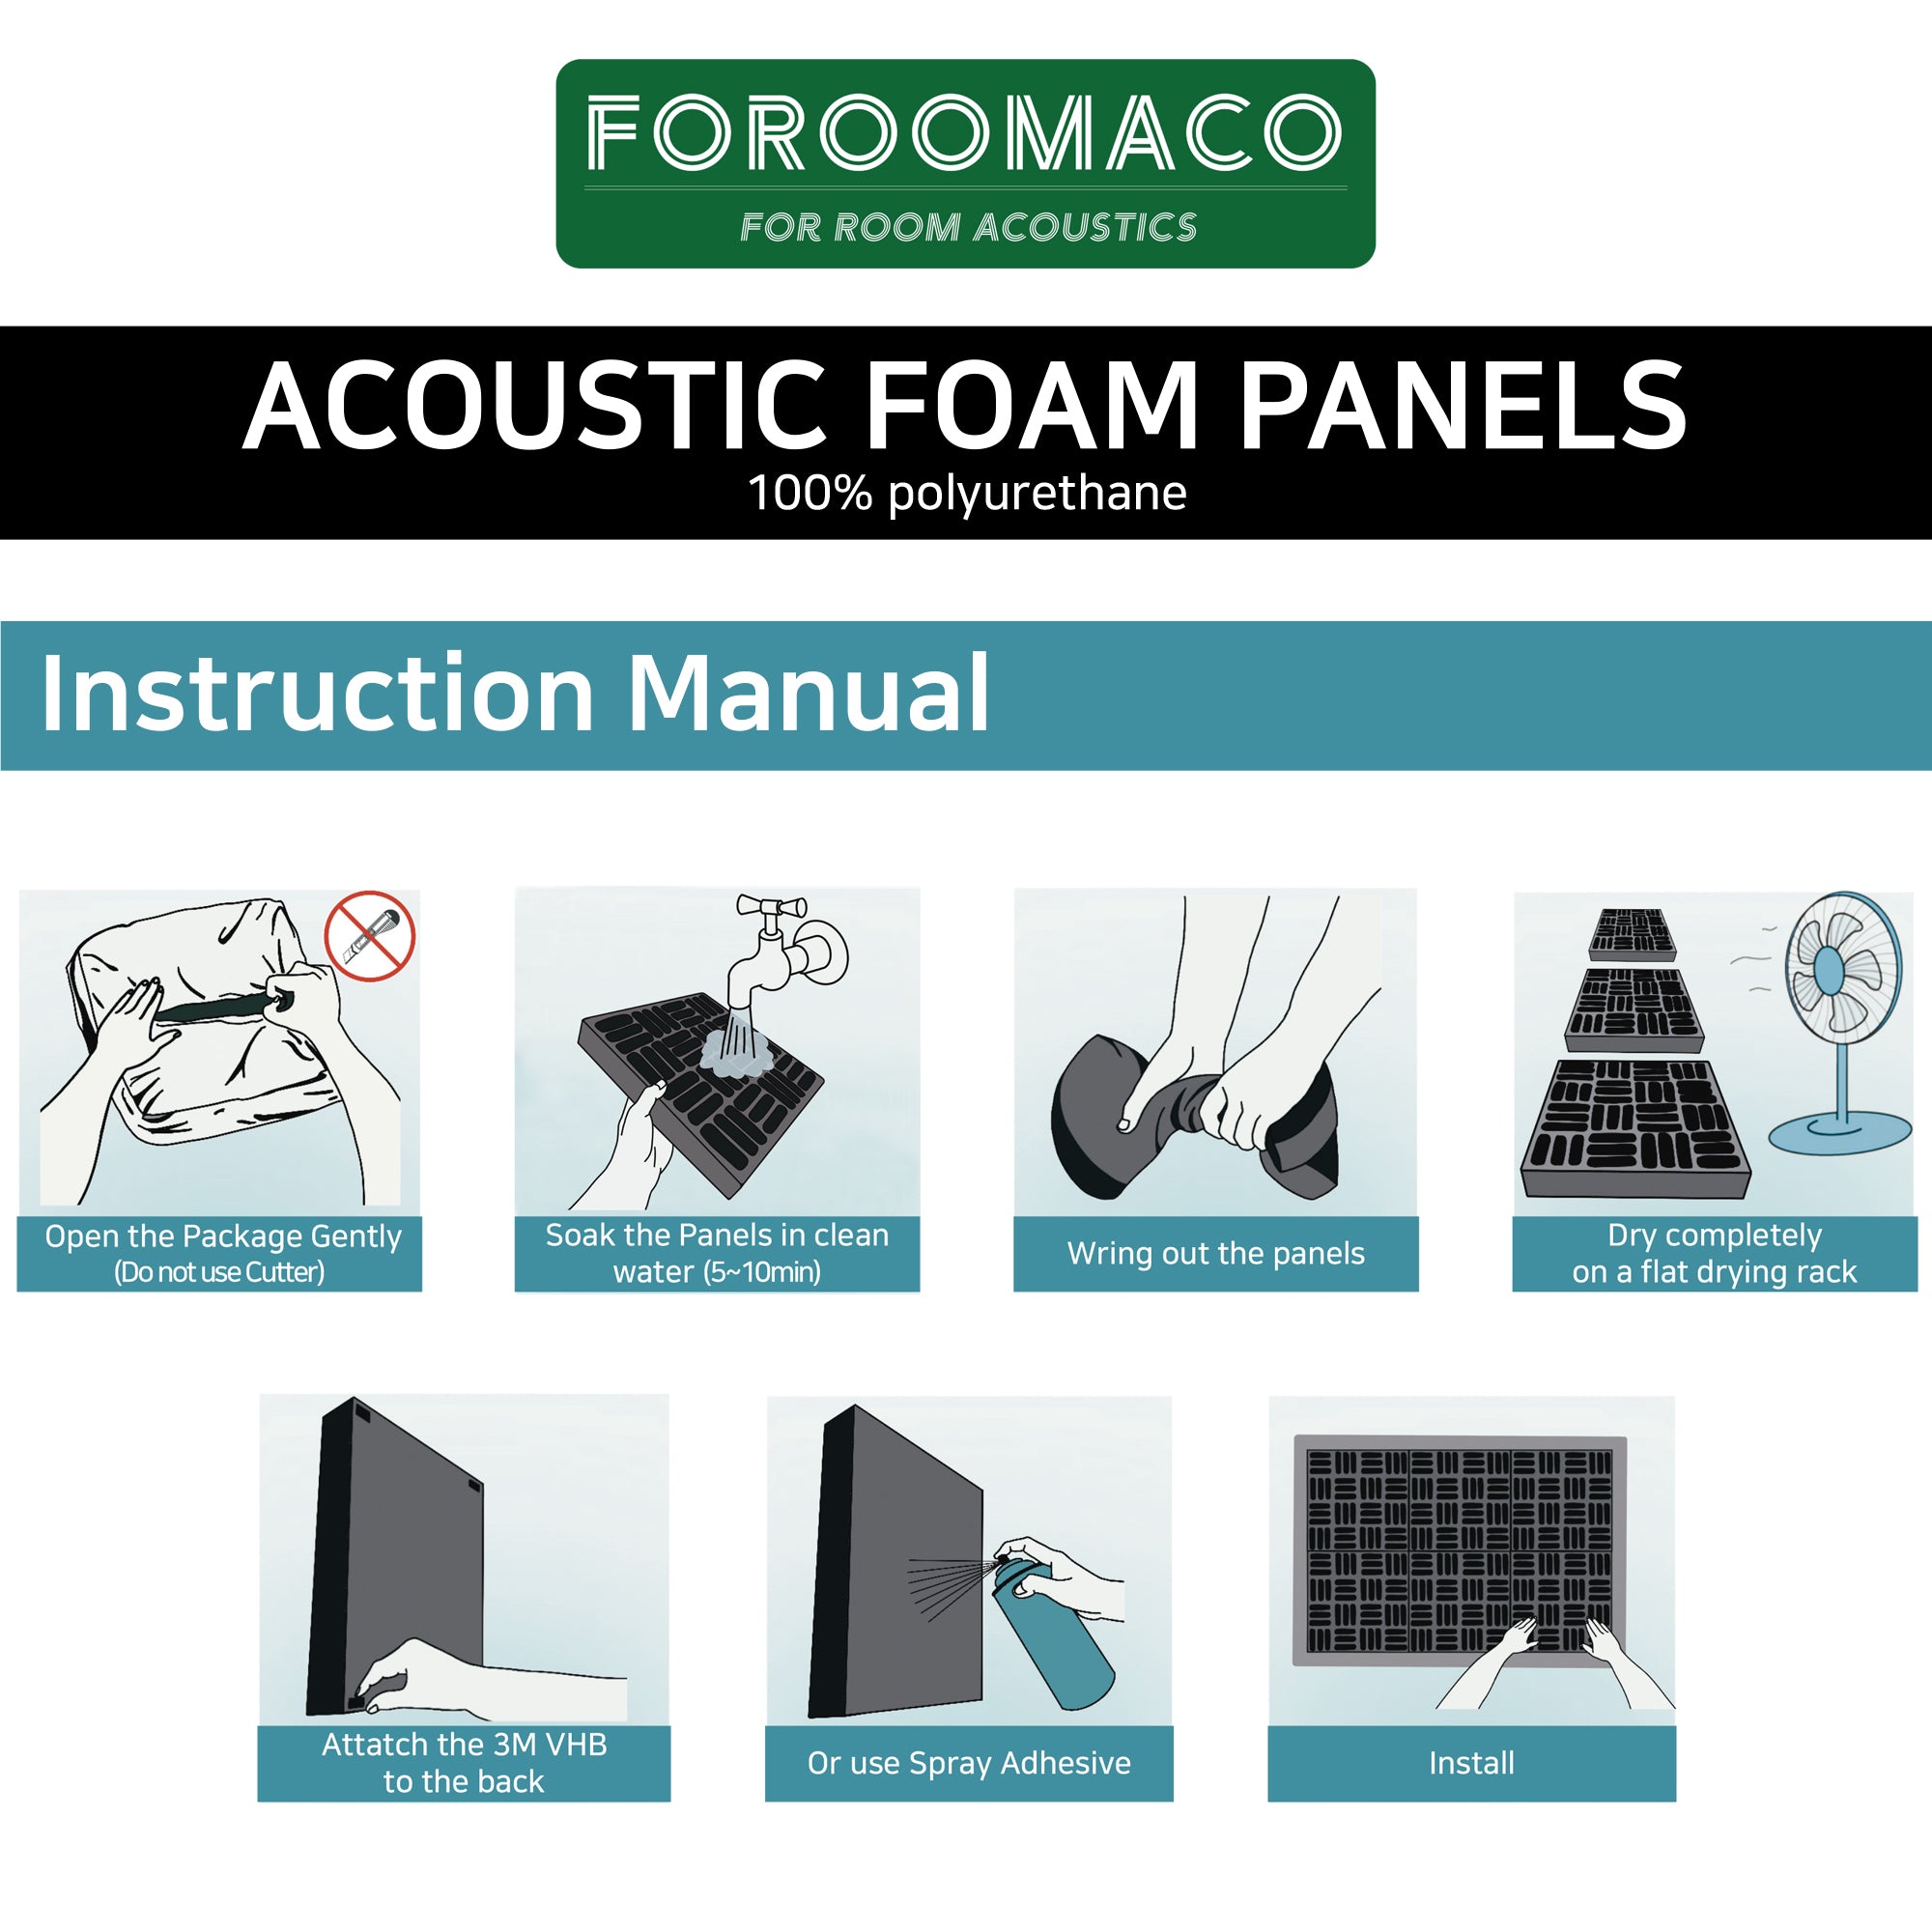 Foroomaco Acoustic Foam Panels Instruction Manual